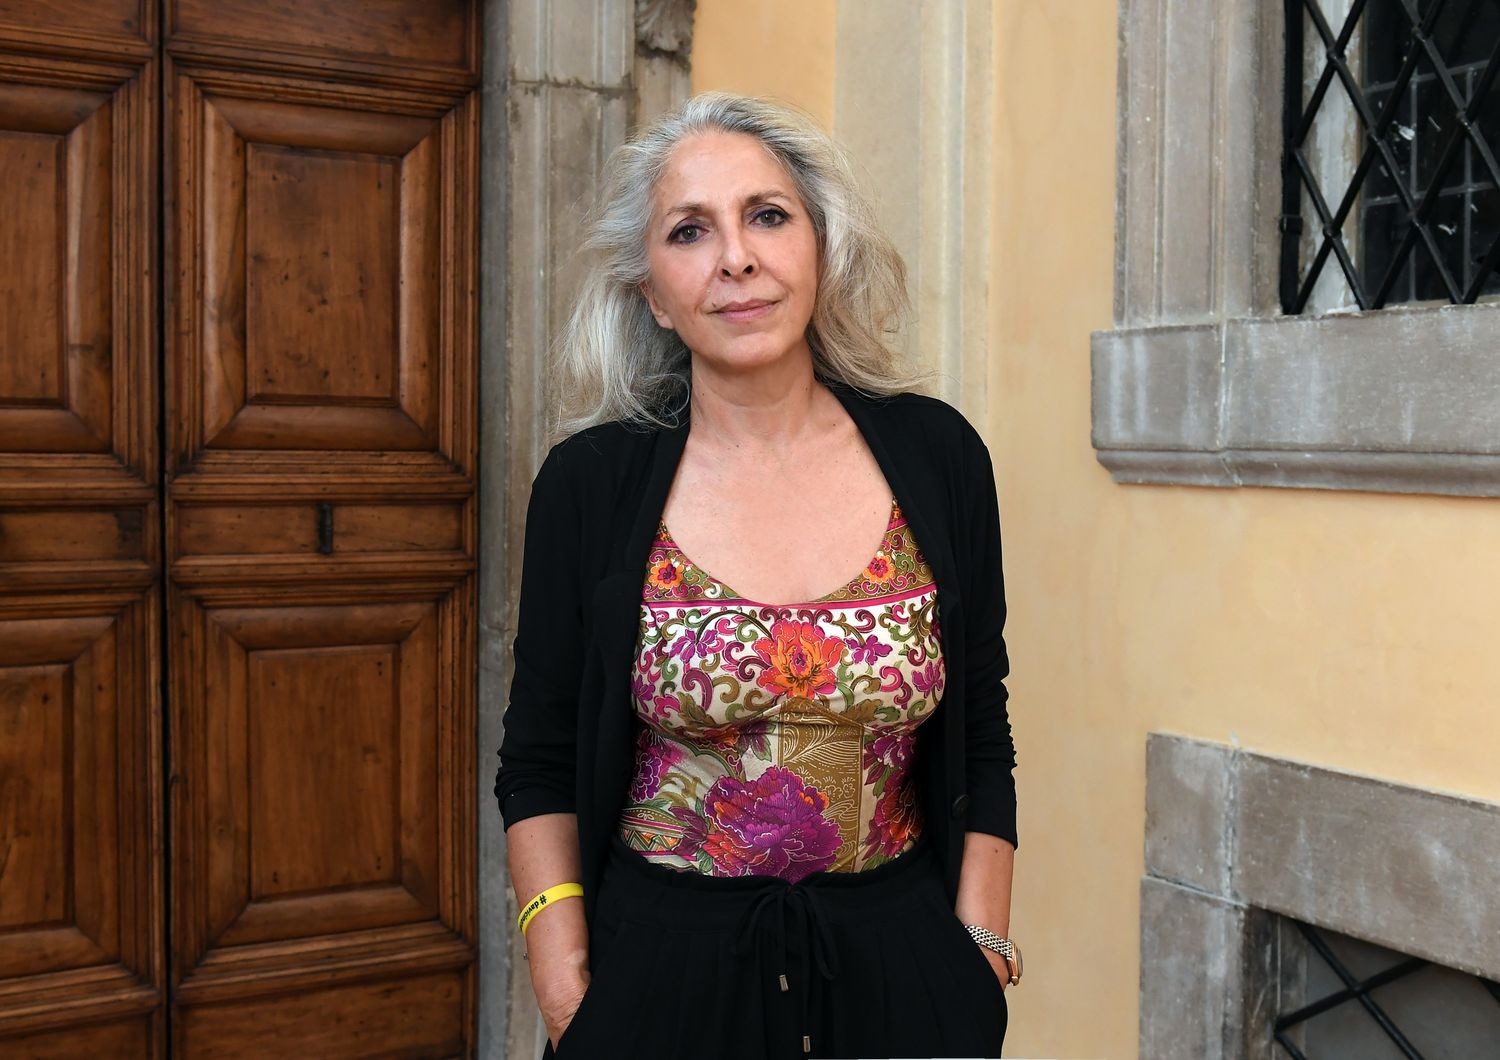 Paola Severini Melograni